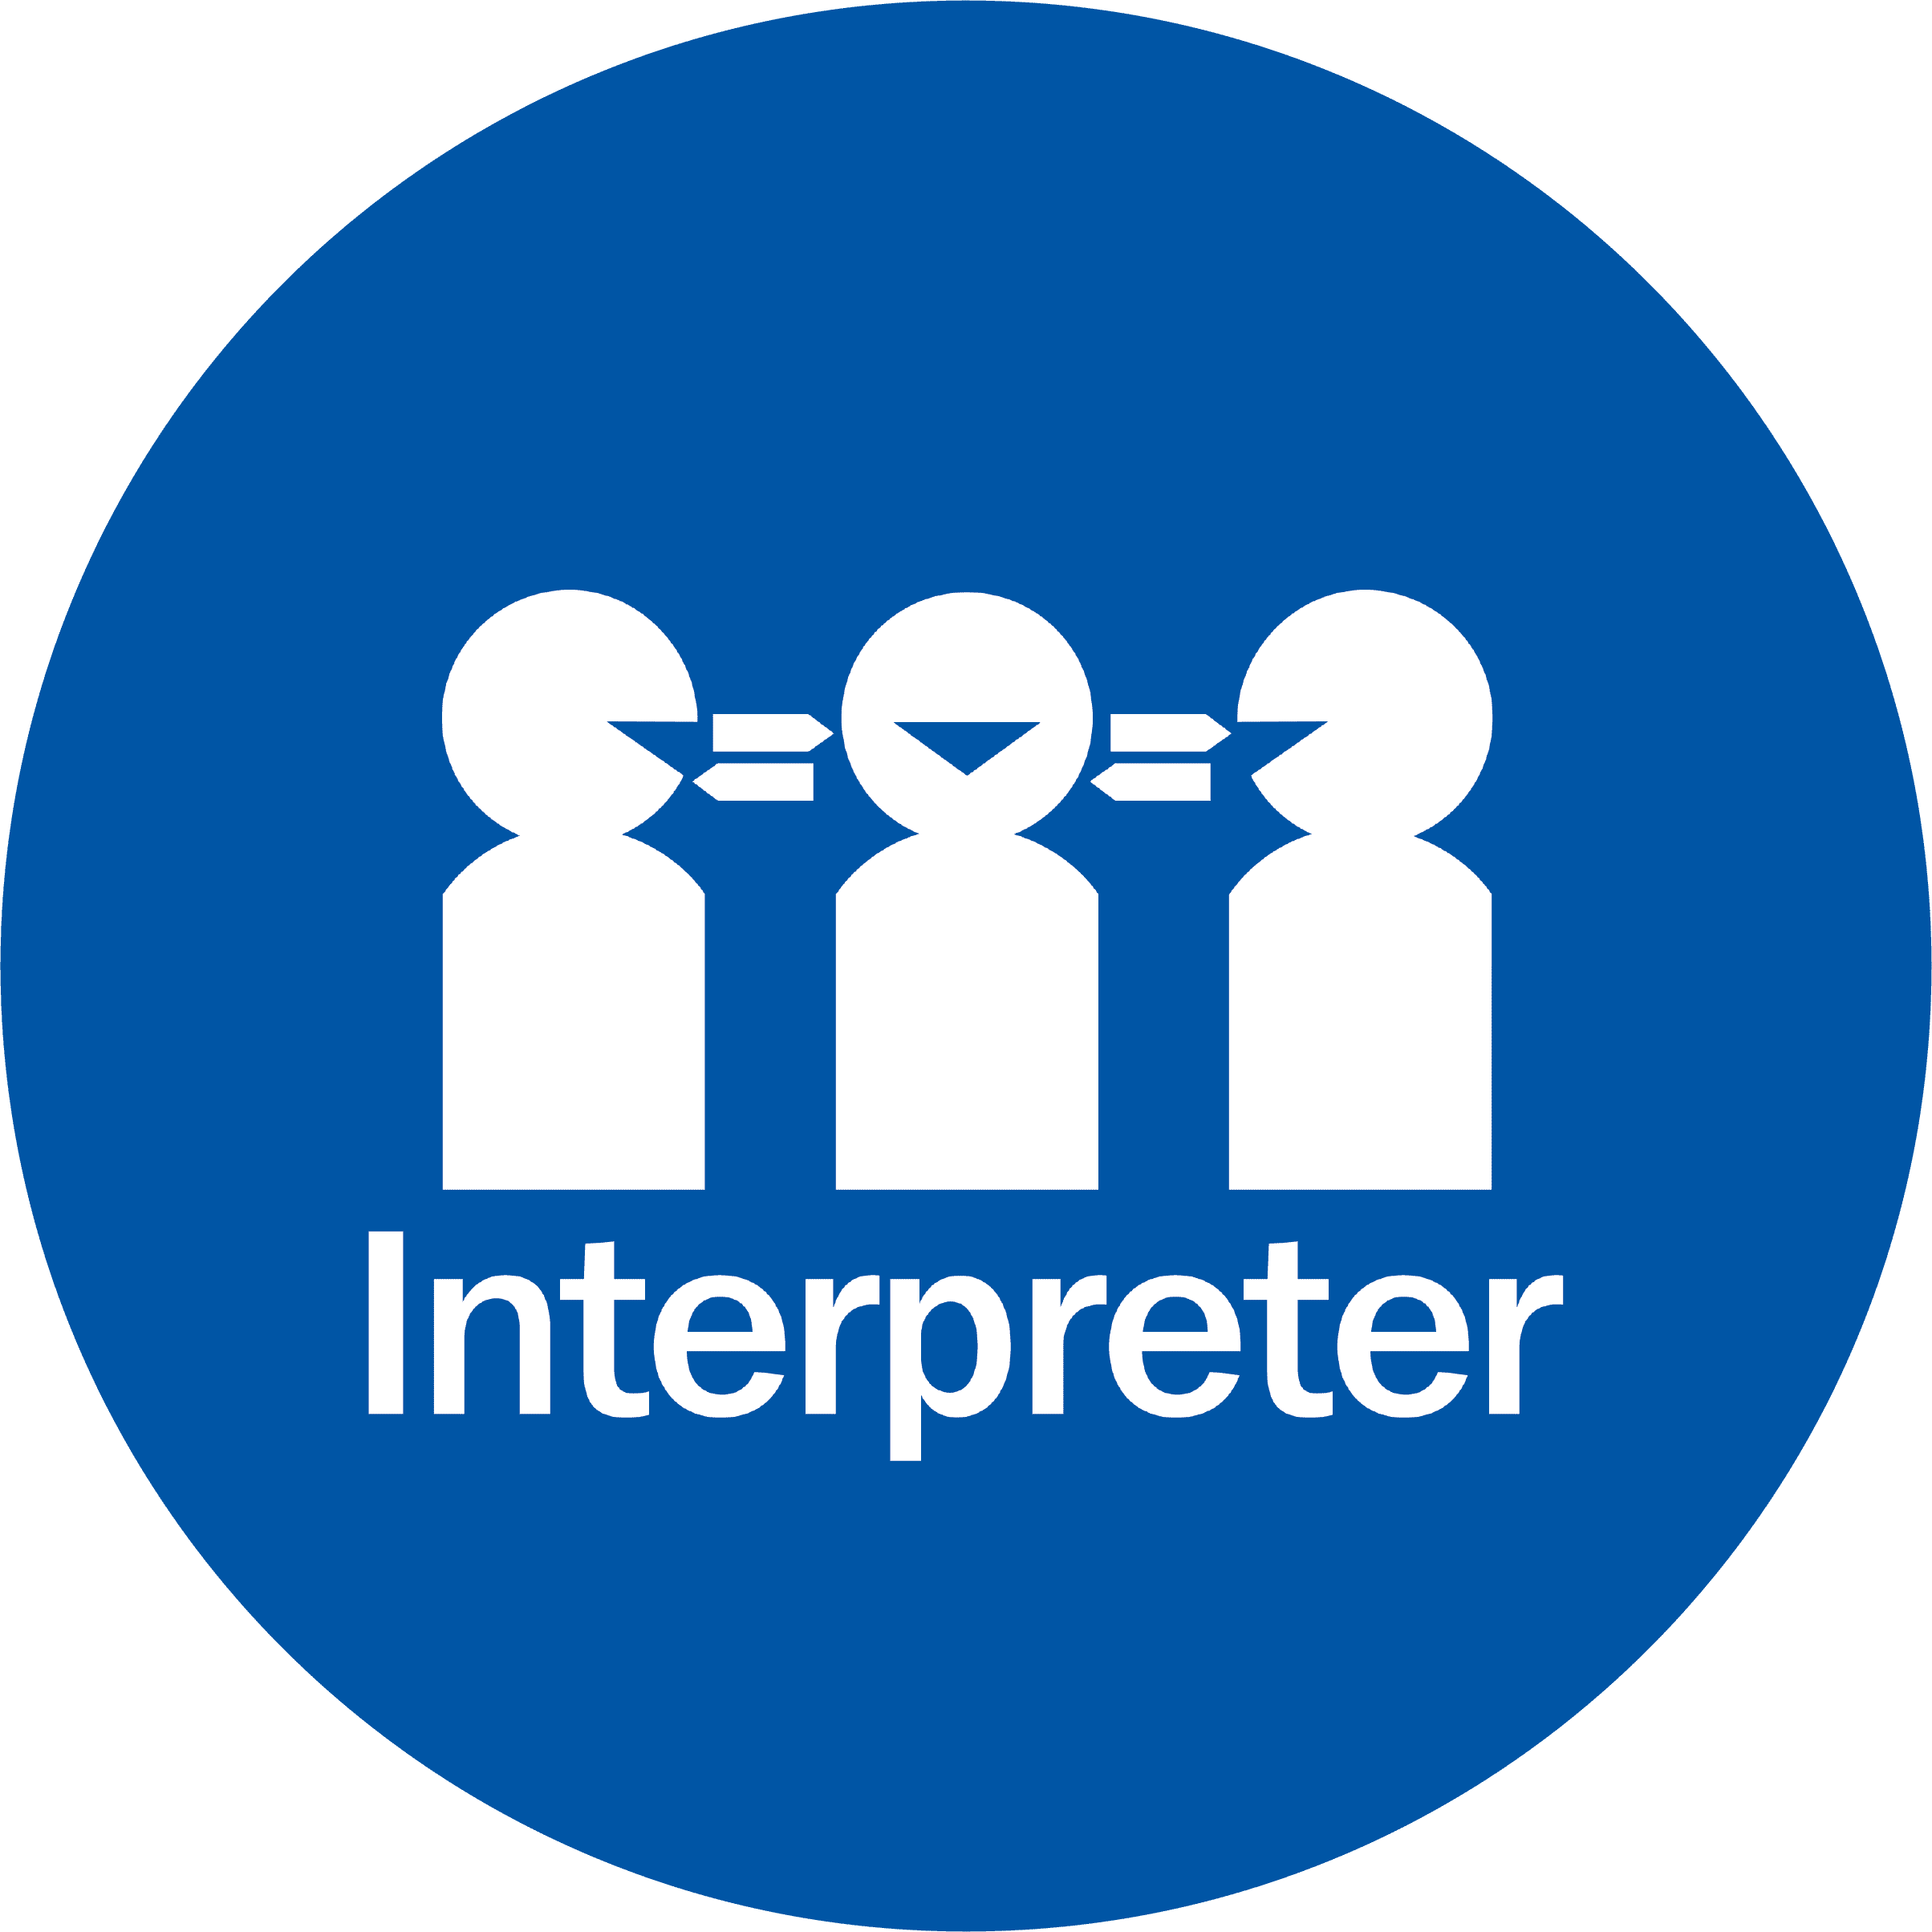 Interpreter Symbol